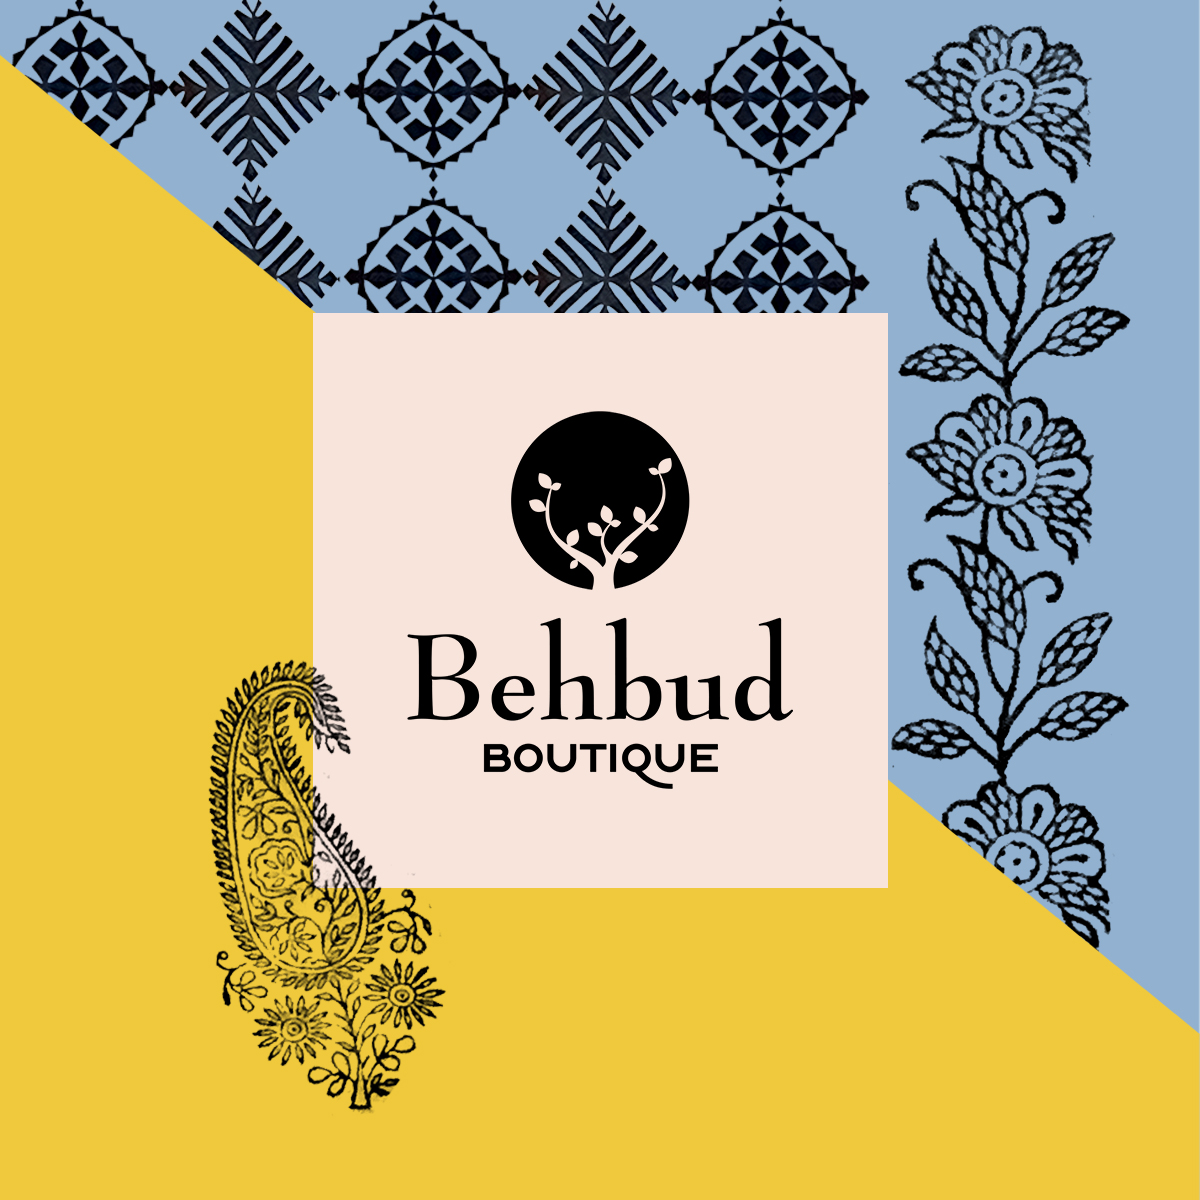 Craft + Women Empowerment: Putting Behbud Online